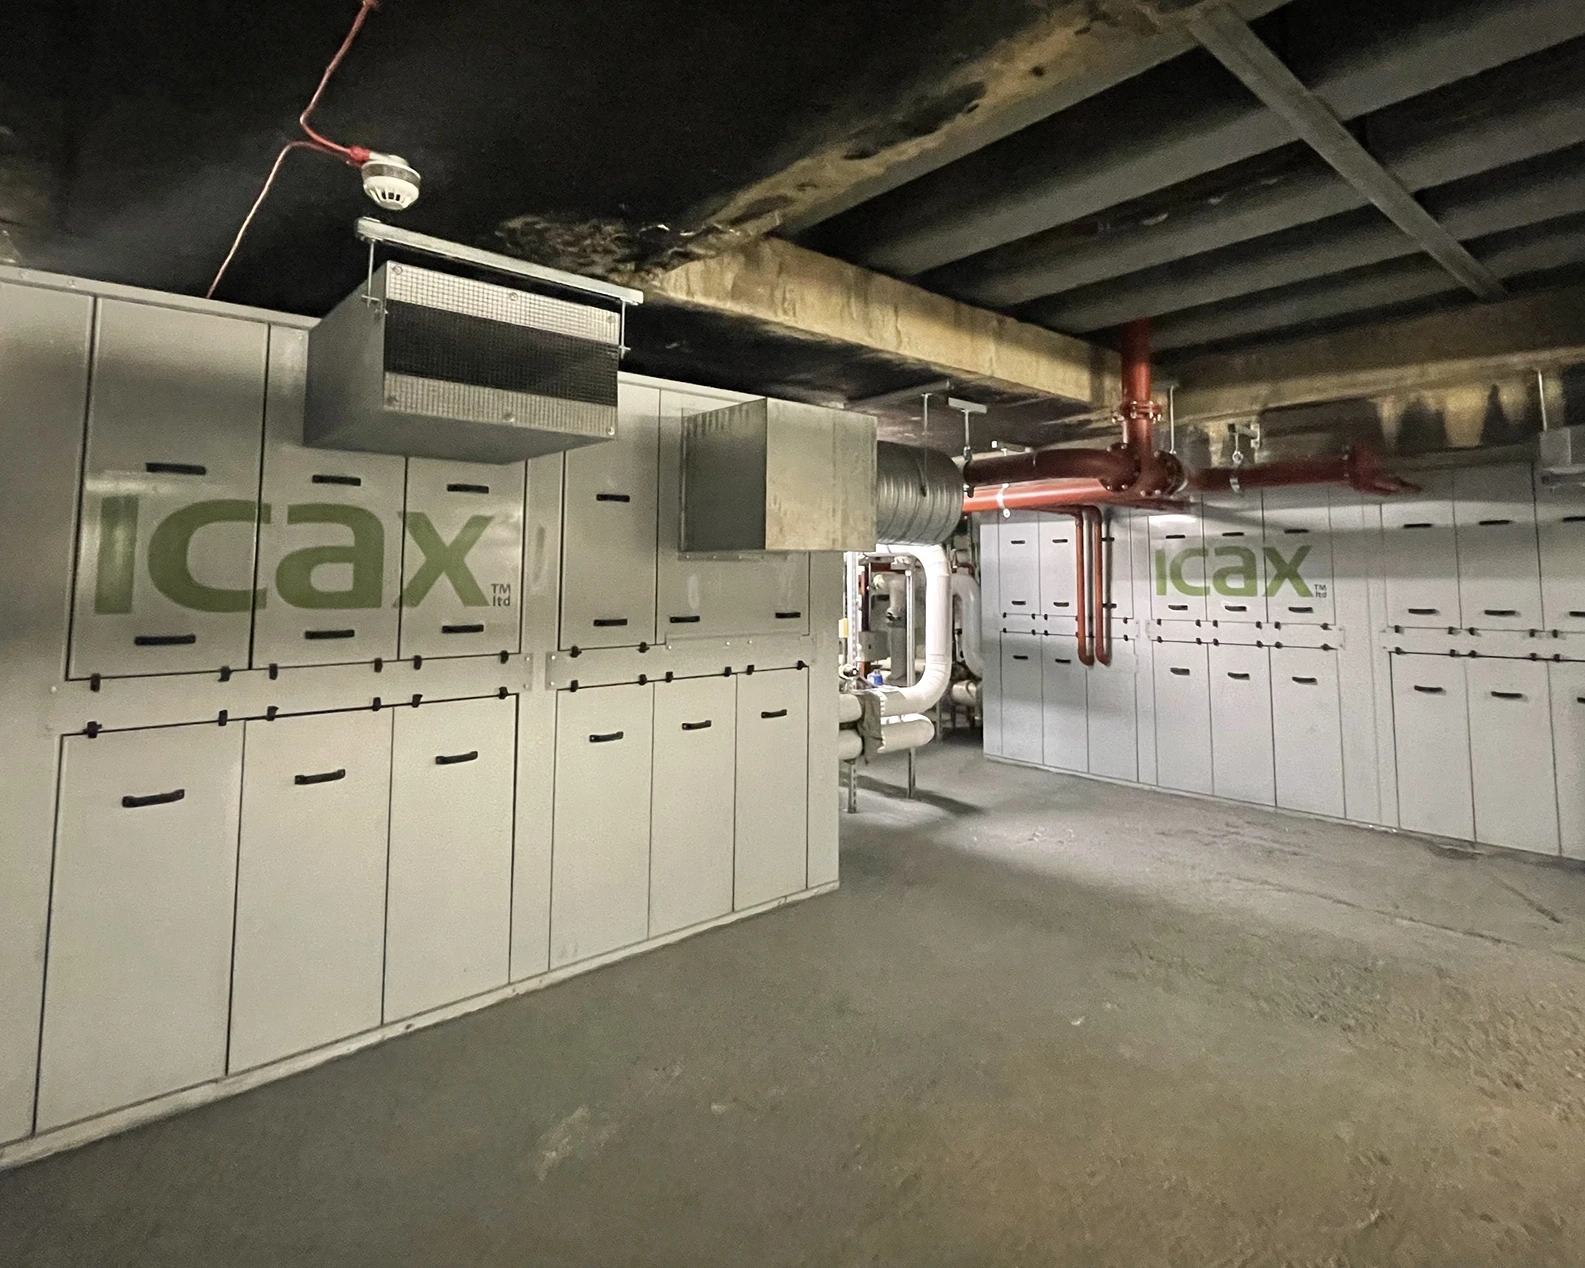 ICAX Heat Pumps Southwark